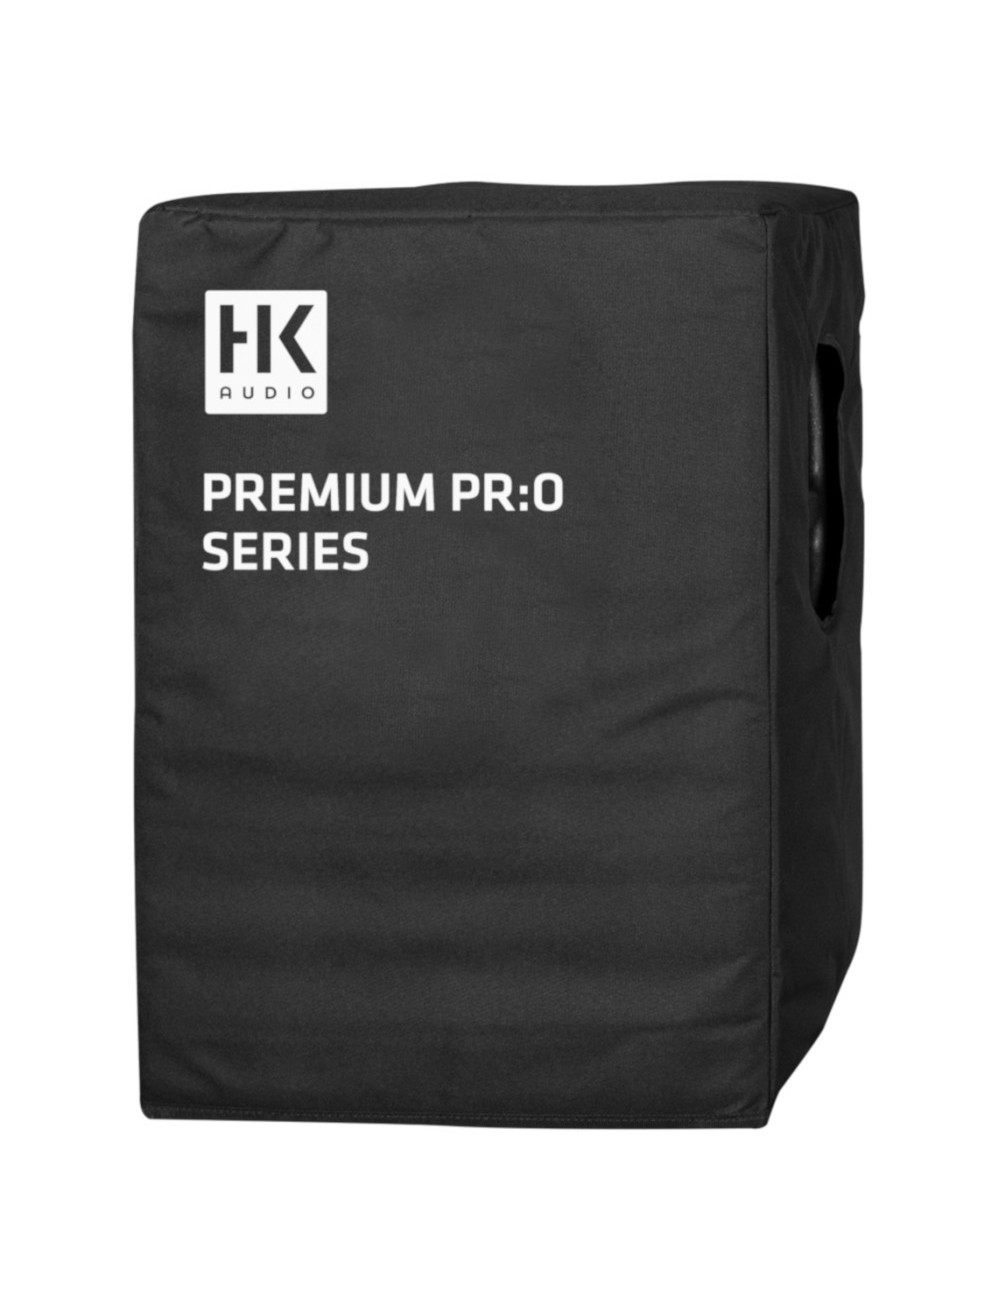 Pokrowiec ochronny na subwoofer HK Audio Premium PR:O 18